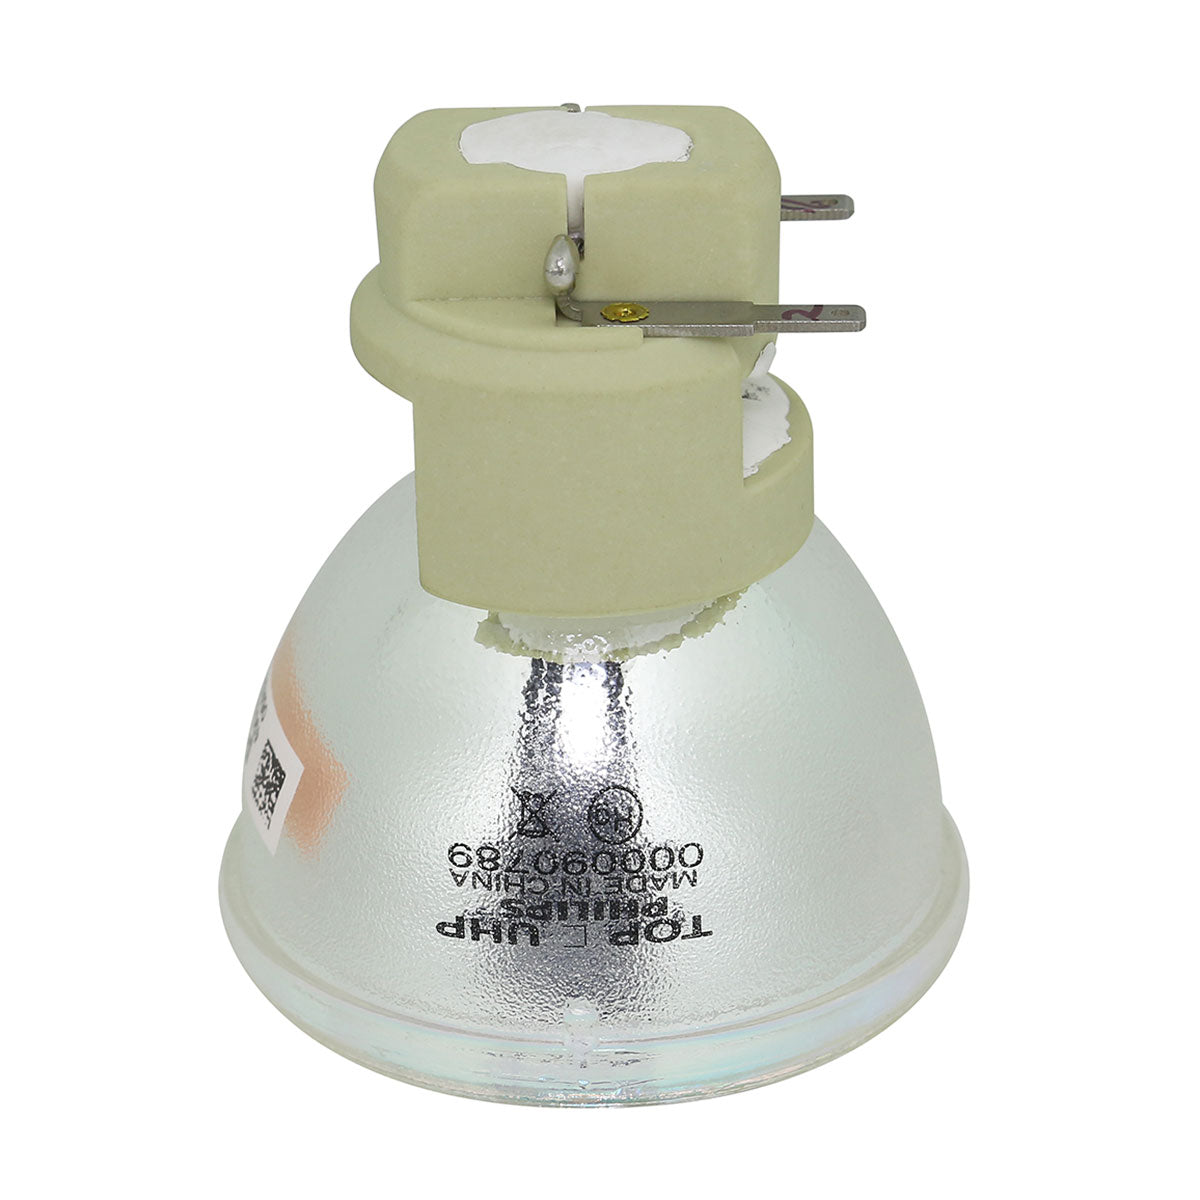 InFocus SP-LAMP-100 Philips Projector Bare Lamp